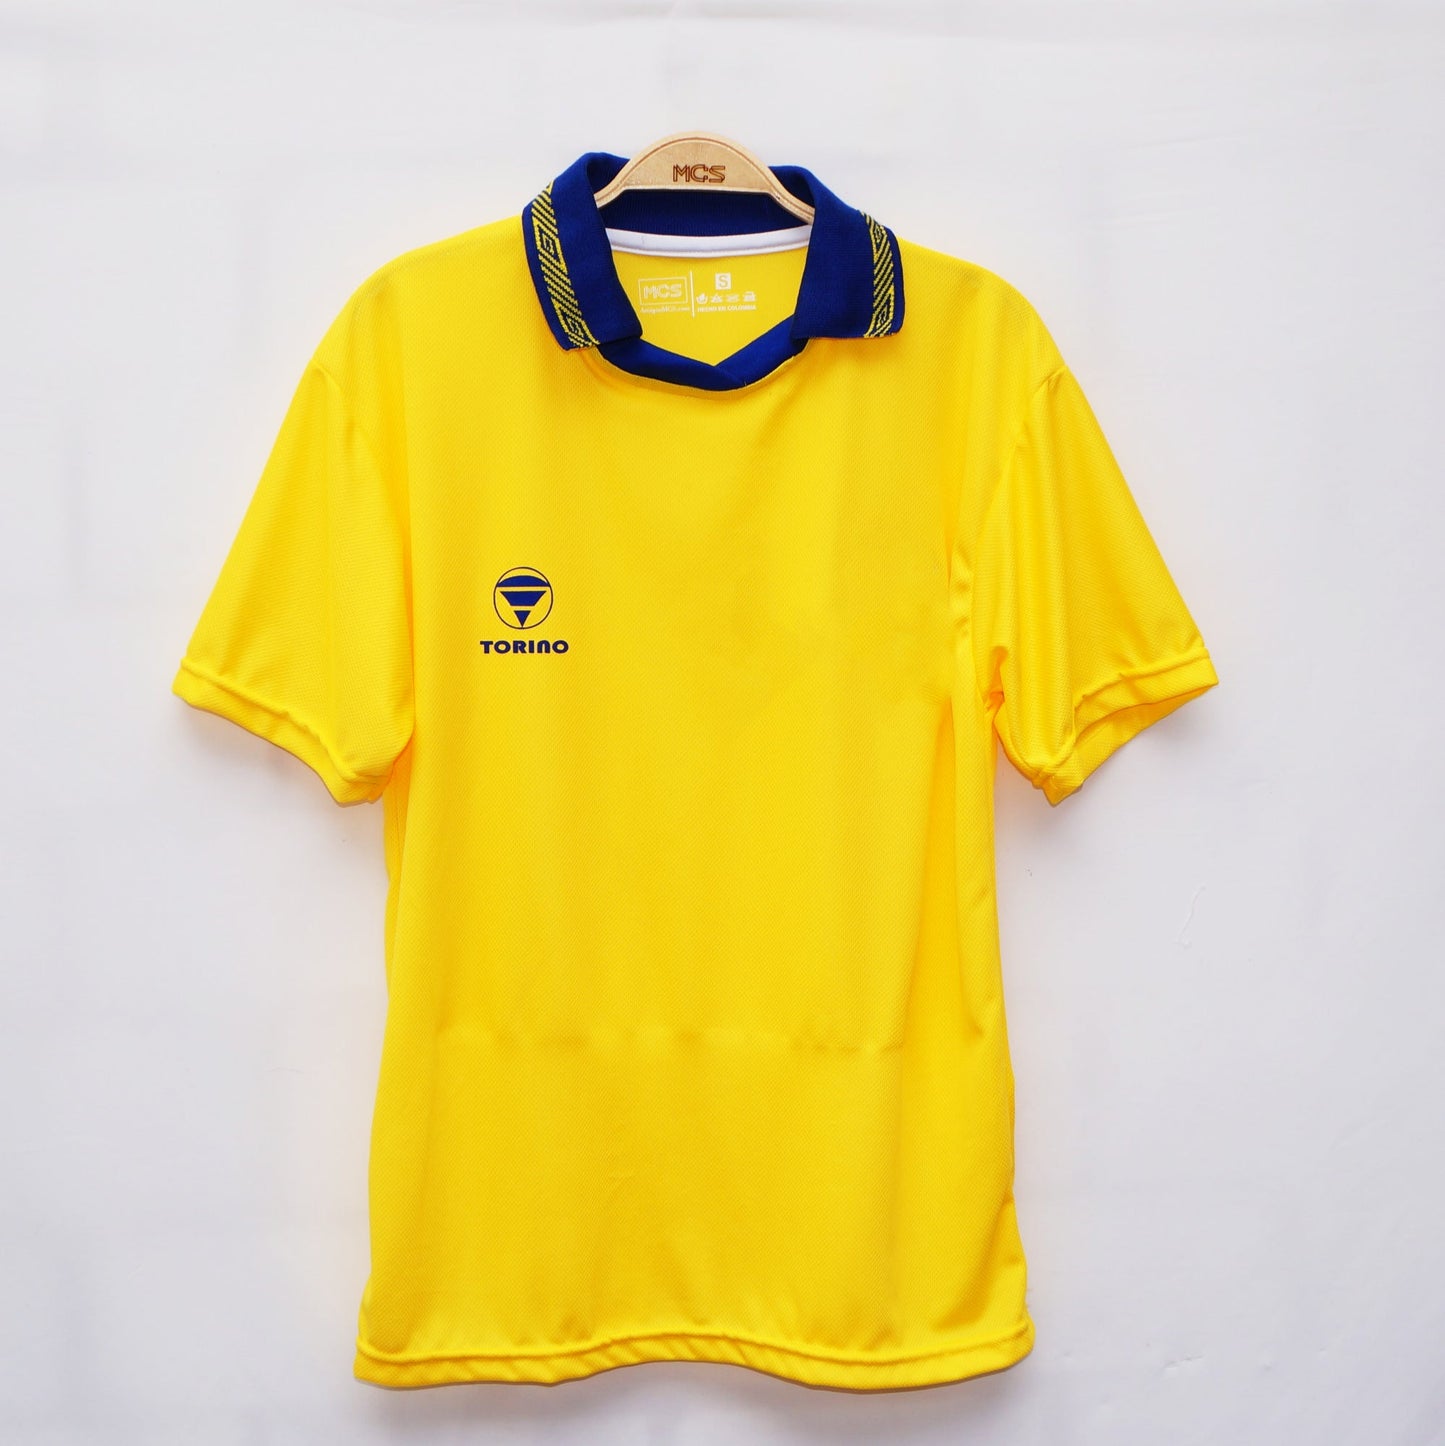 Colombia 1992 Torino Shirt